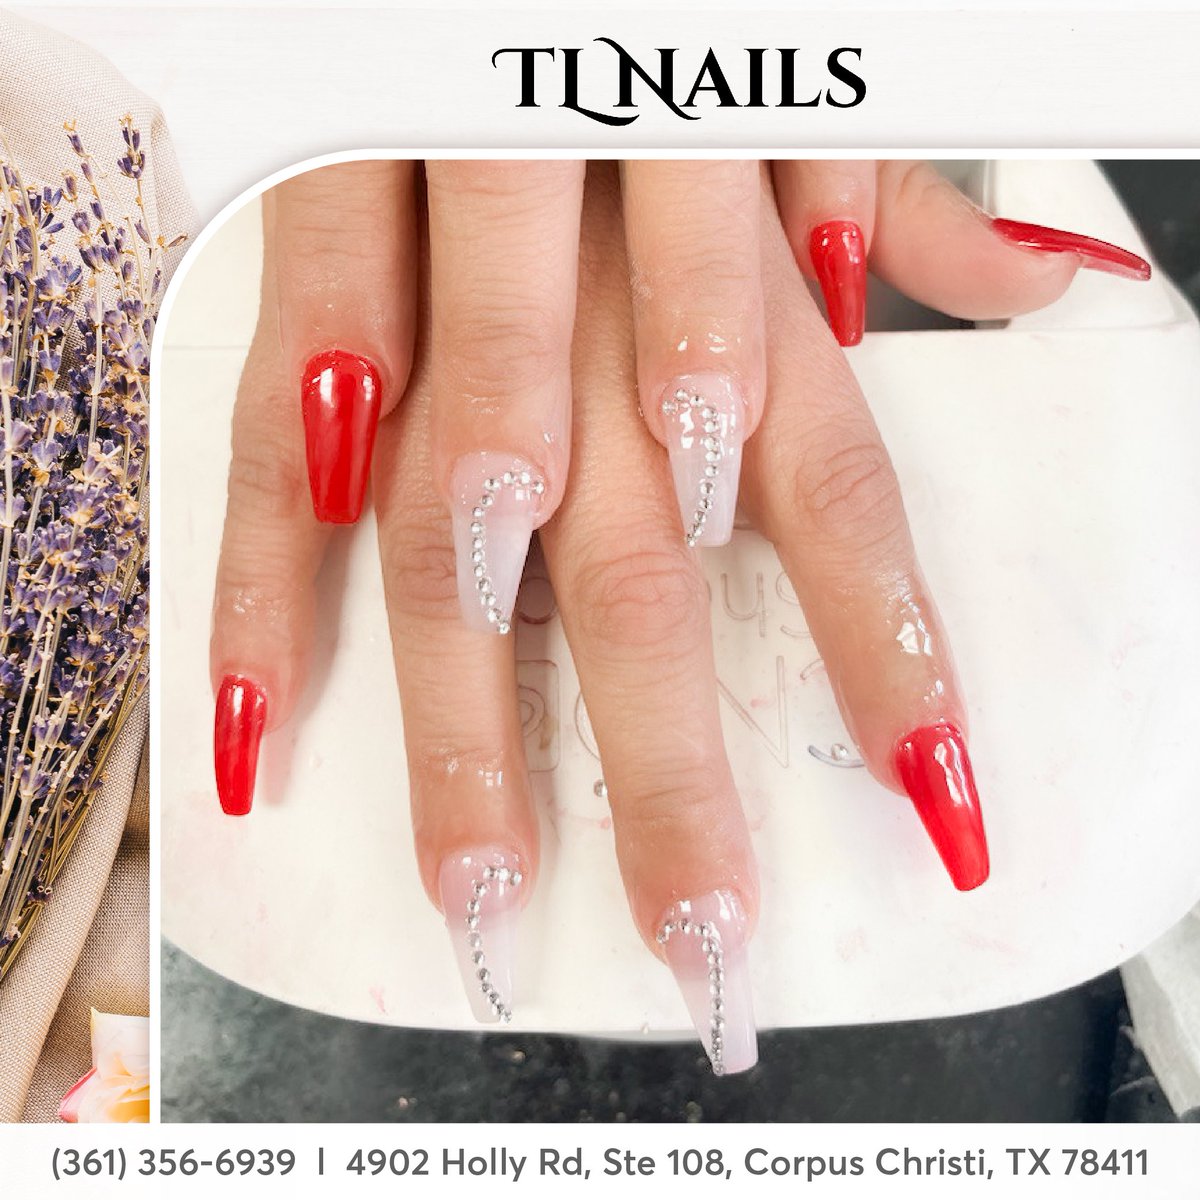 Life's too short for boring nails. Embrace the color and creativity! ✨💖

#TLNails #nailsalontx #TLNailstx #nails #nailart #mani #pedicure #manicure #beauty #nailsalon #nailsalonnearme #nail #gelnails #nailstyle #nailsart #naildesign #love #acrylicnails #naildesigns #nailswag